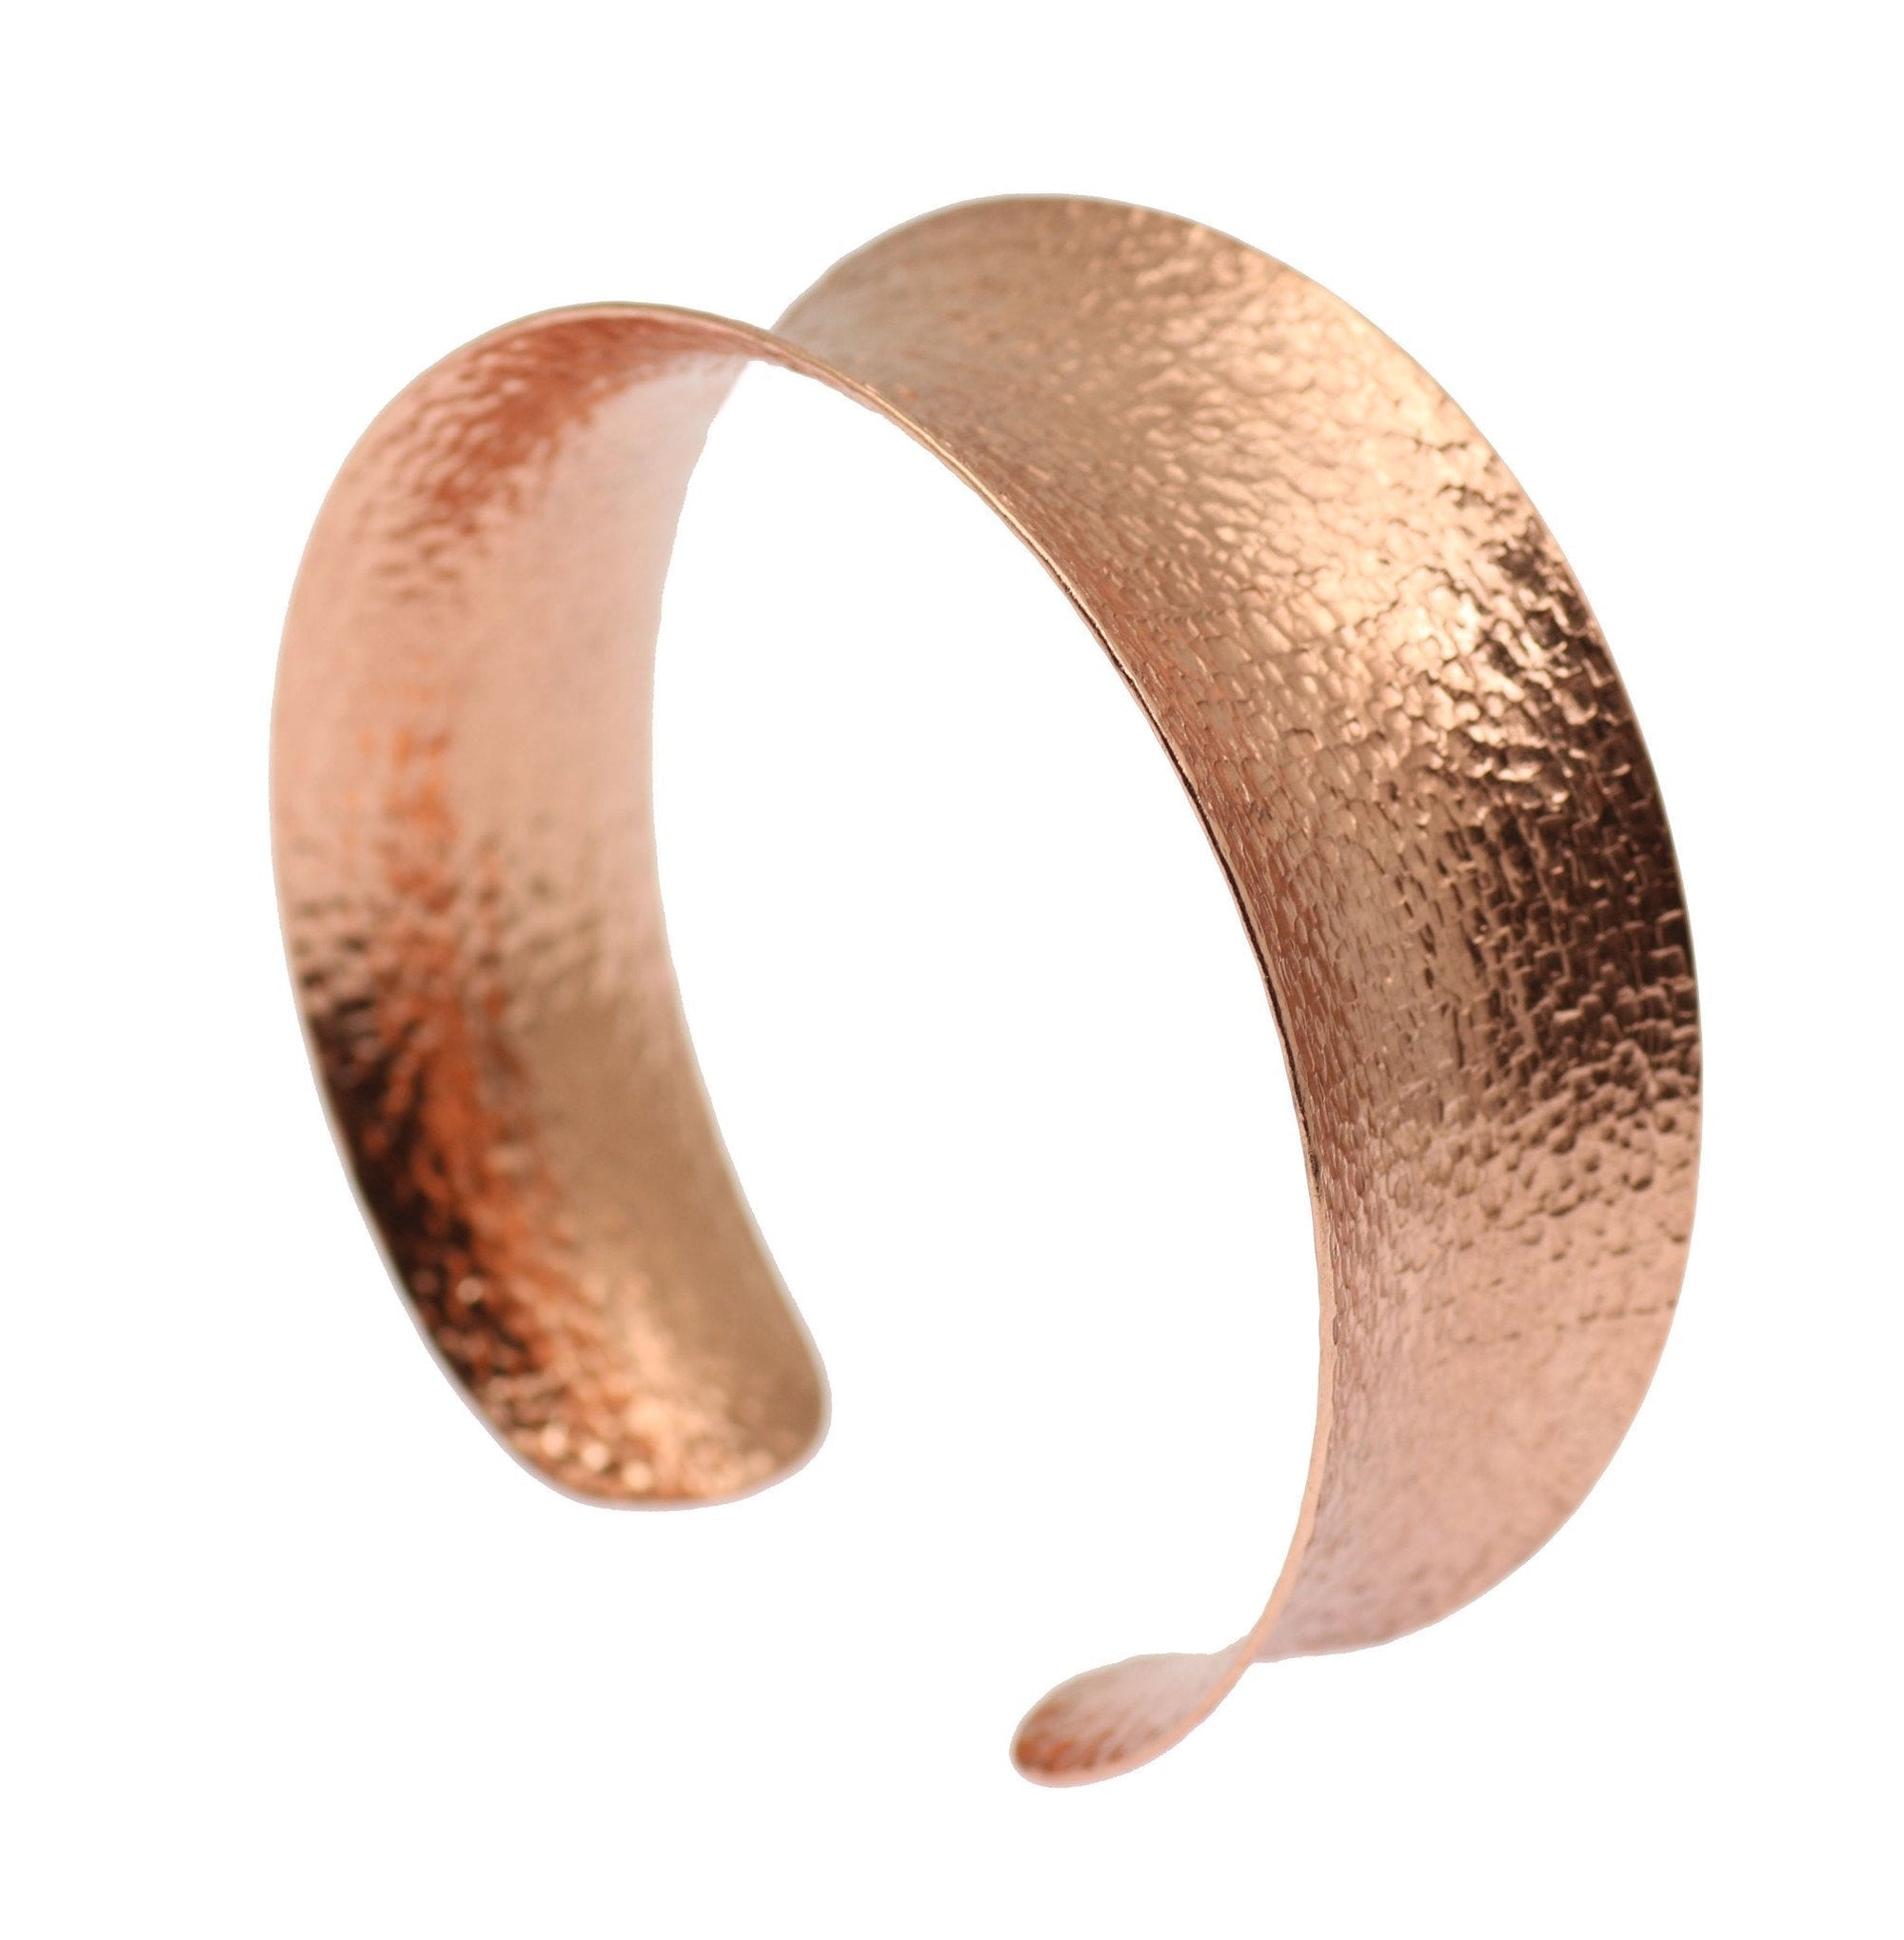 Shape of Texturized Copper Bangle Bracelet